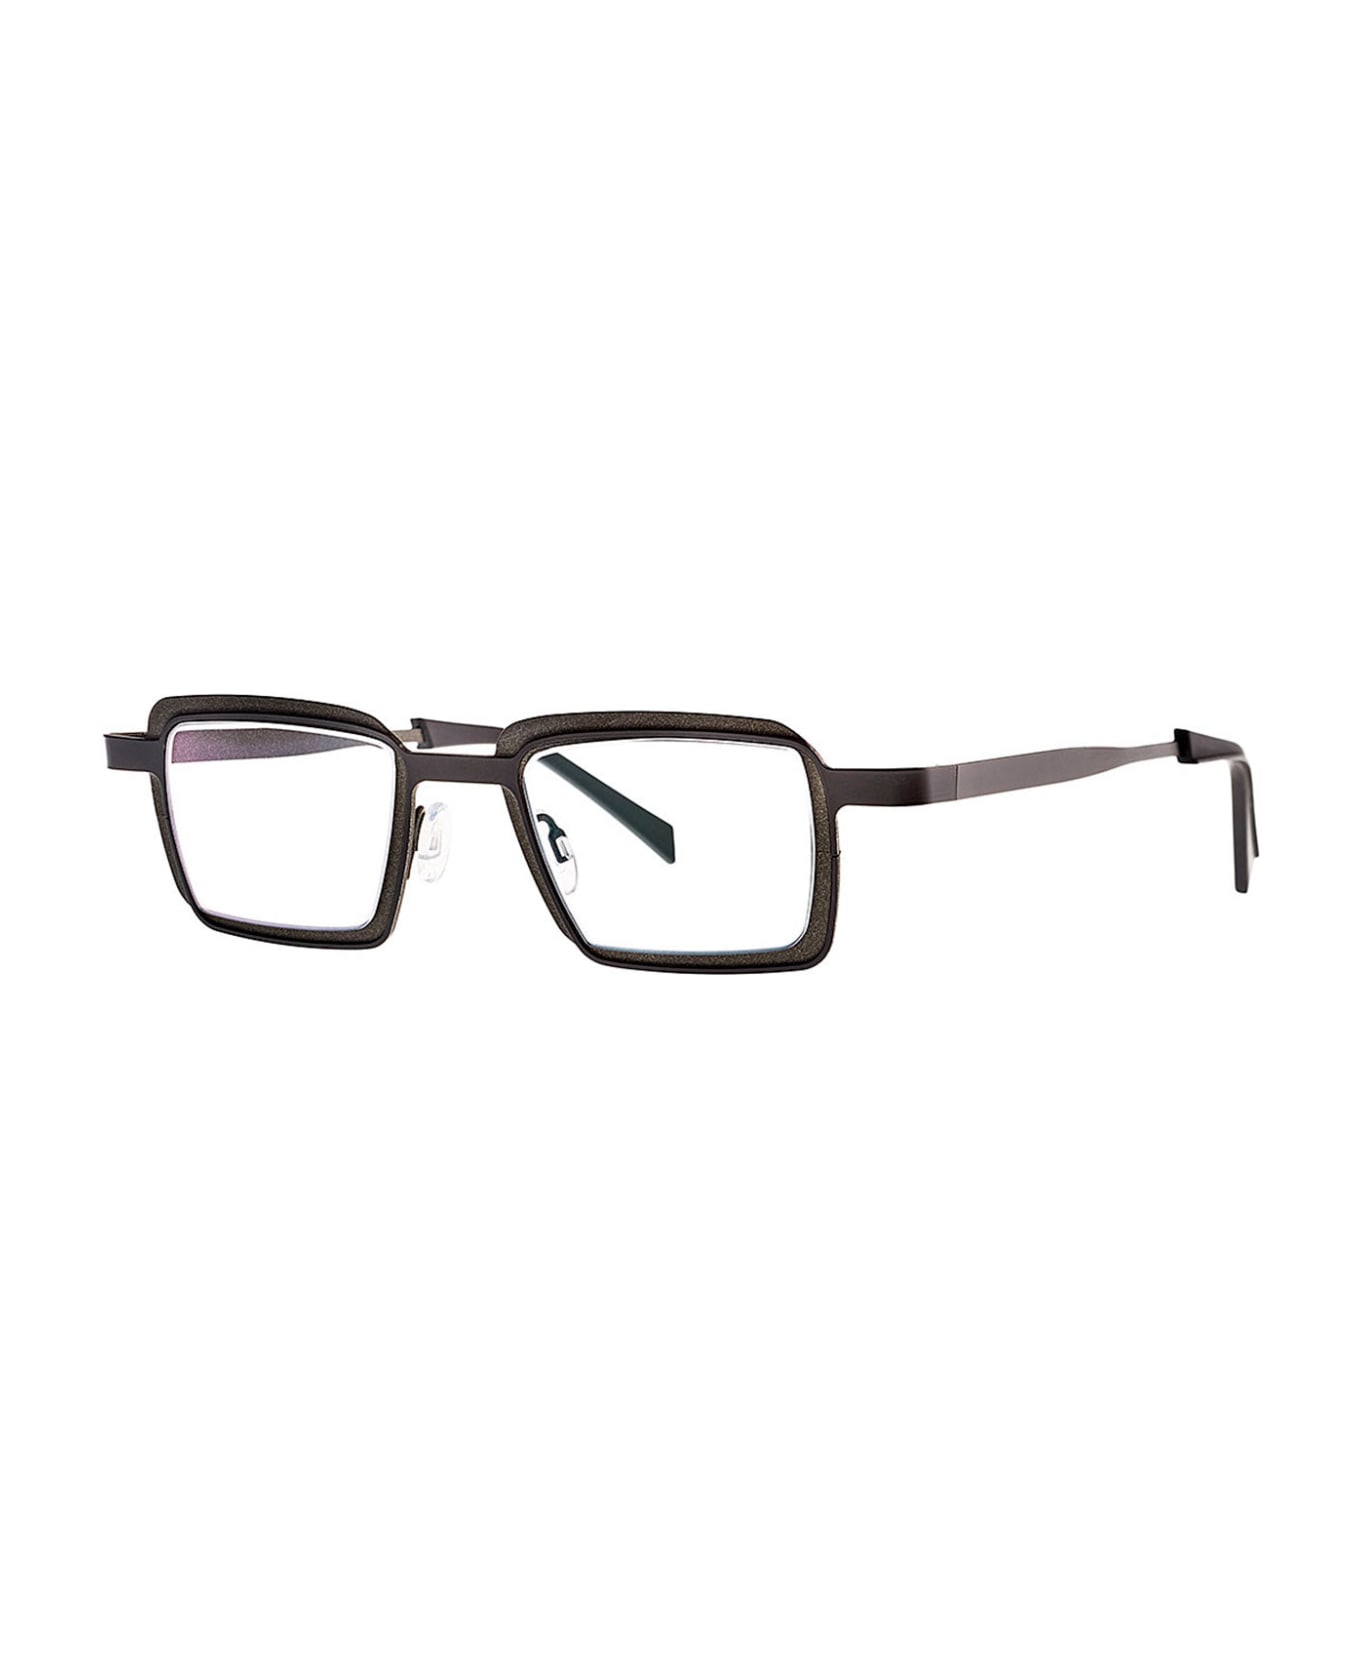 Theo Eyewear Eye Witness Yc 258 Glasses - Black